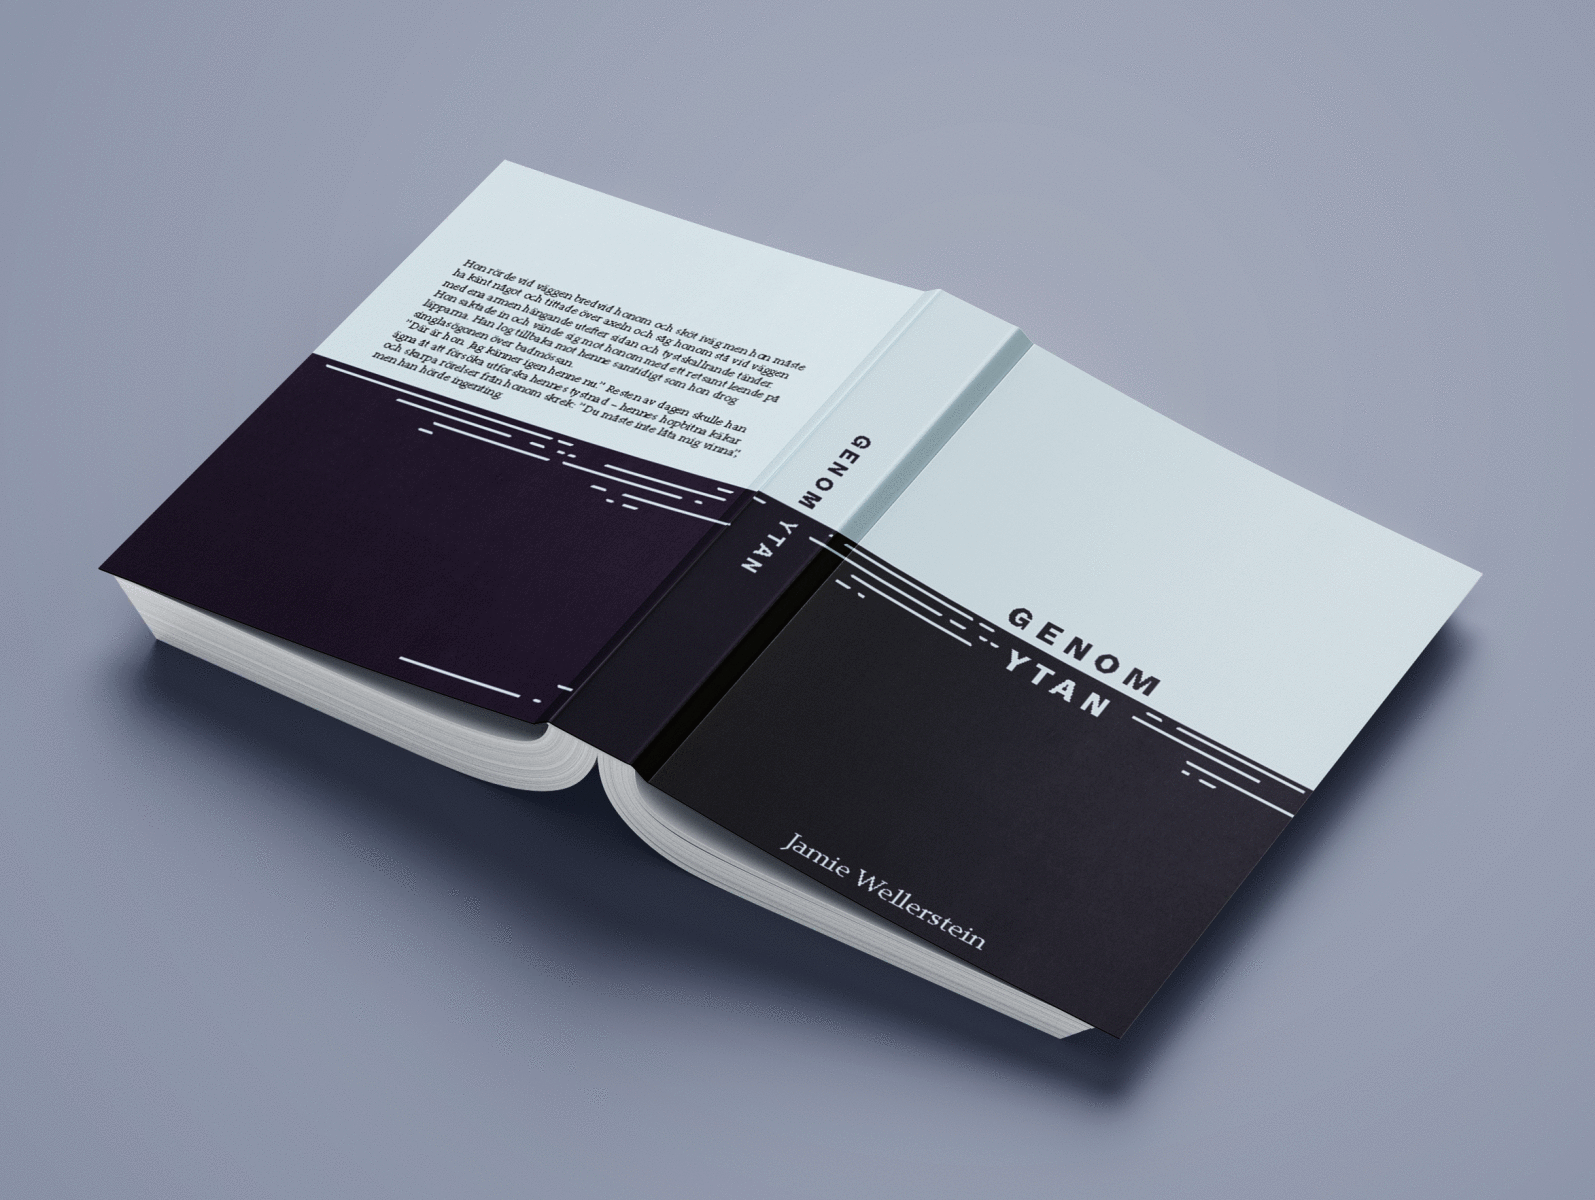 Genom Ytan book cover design